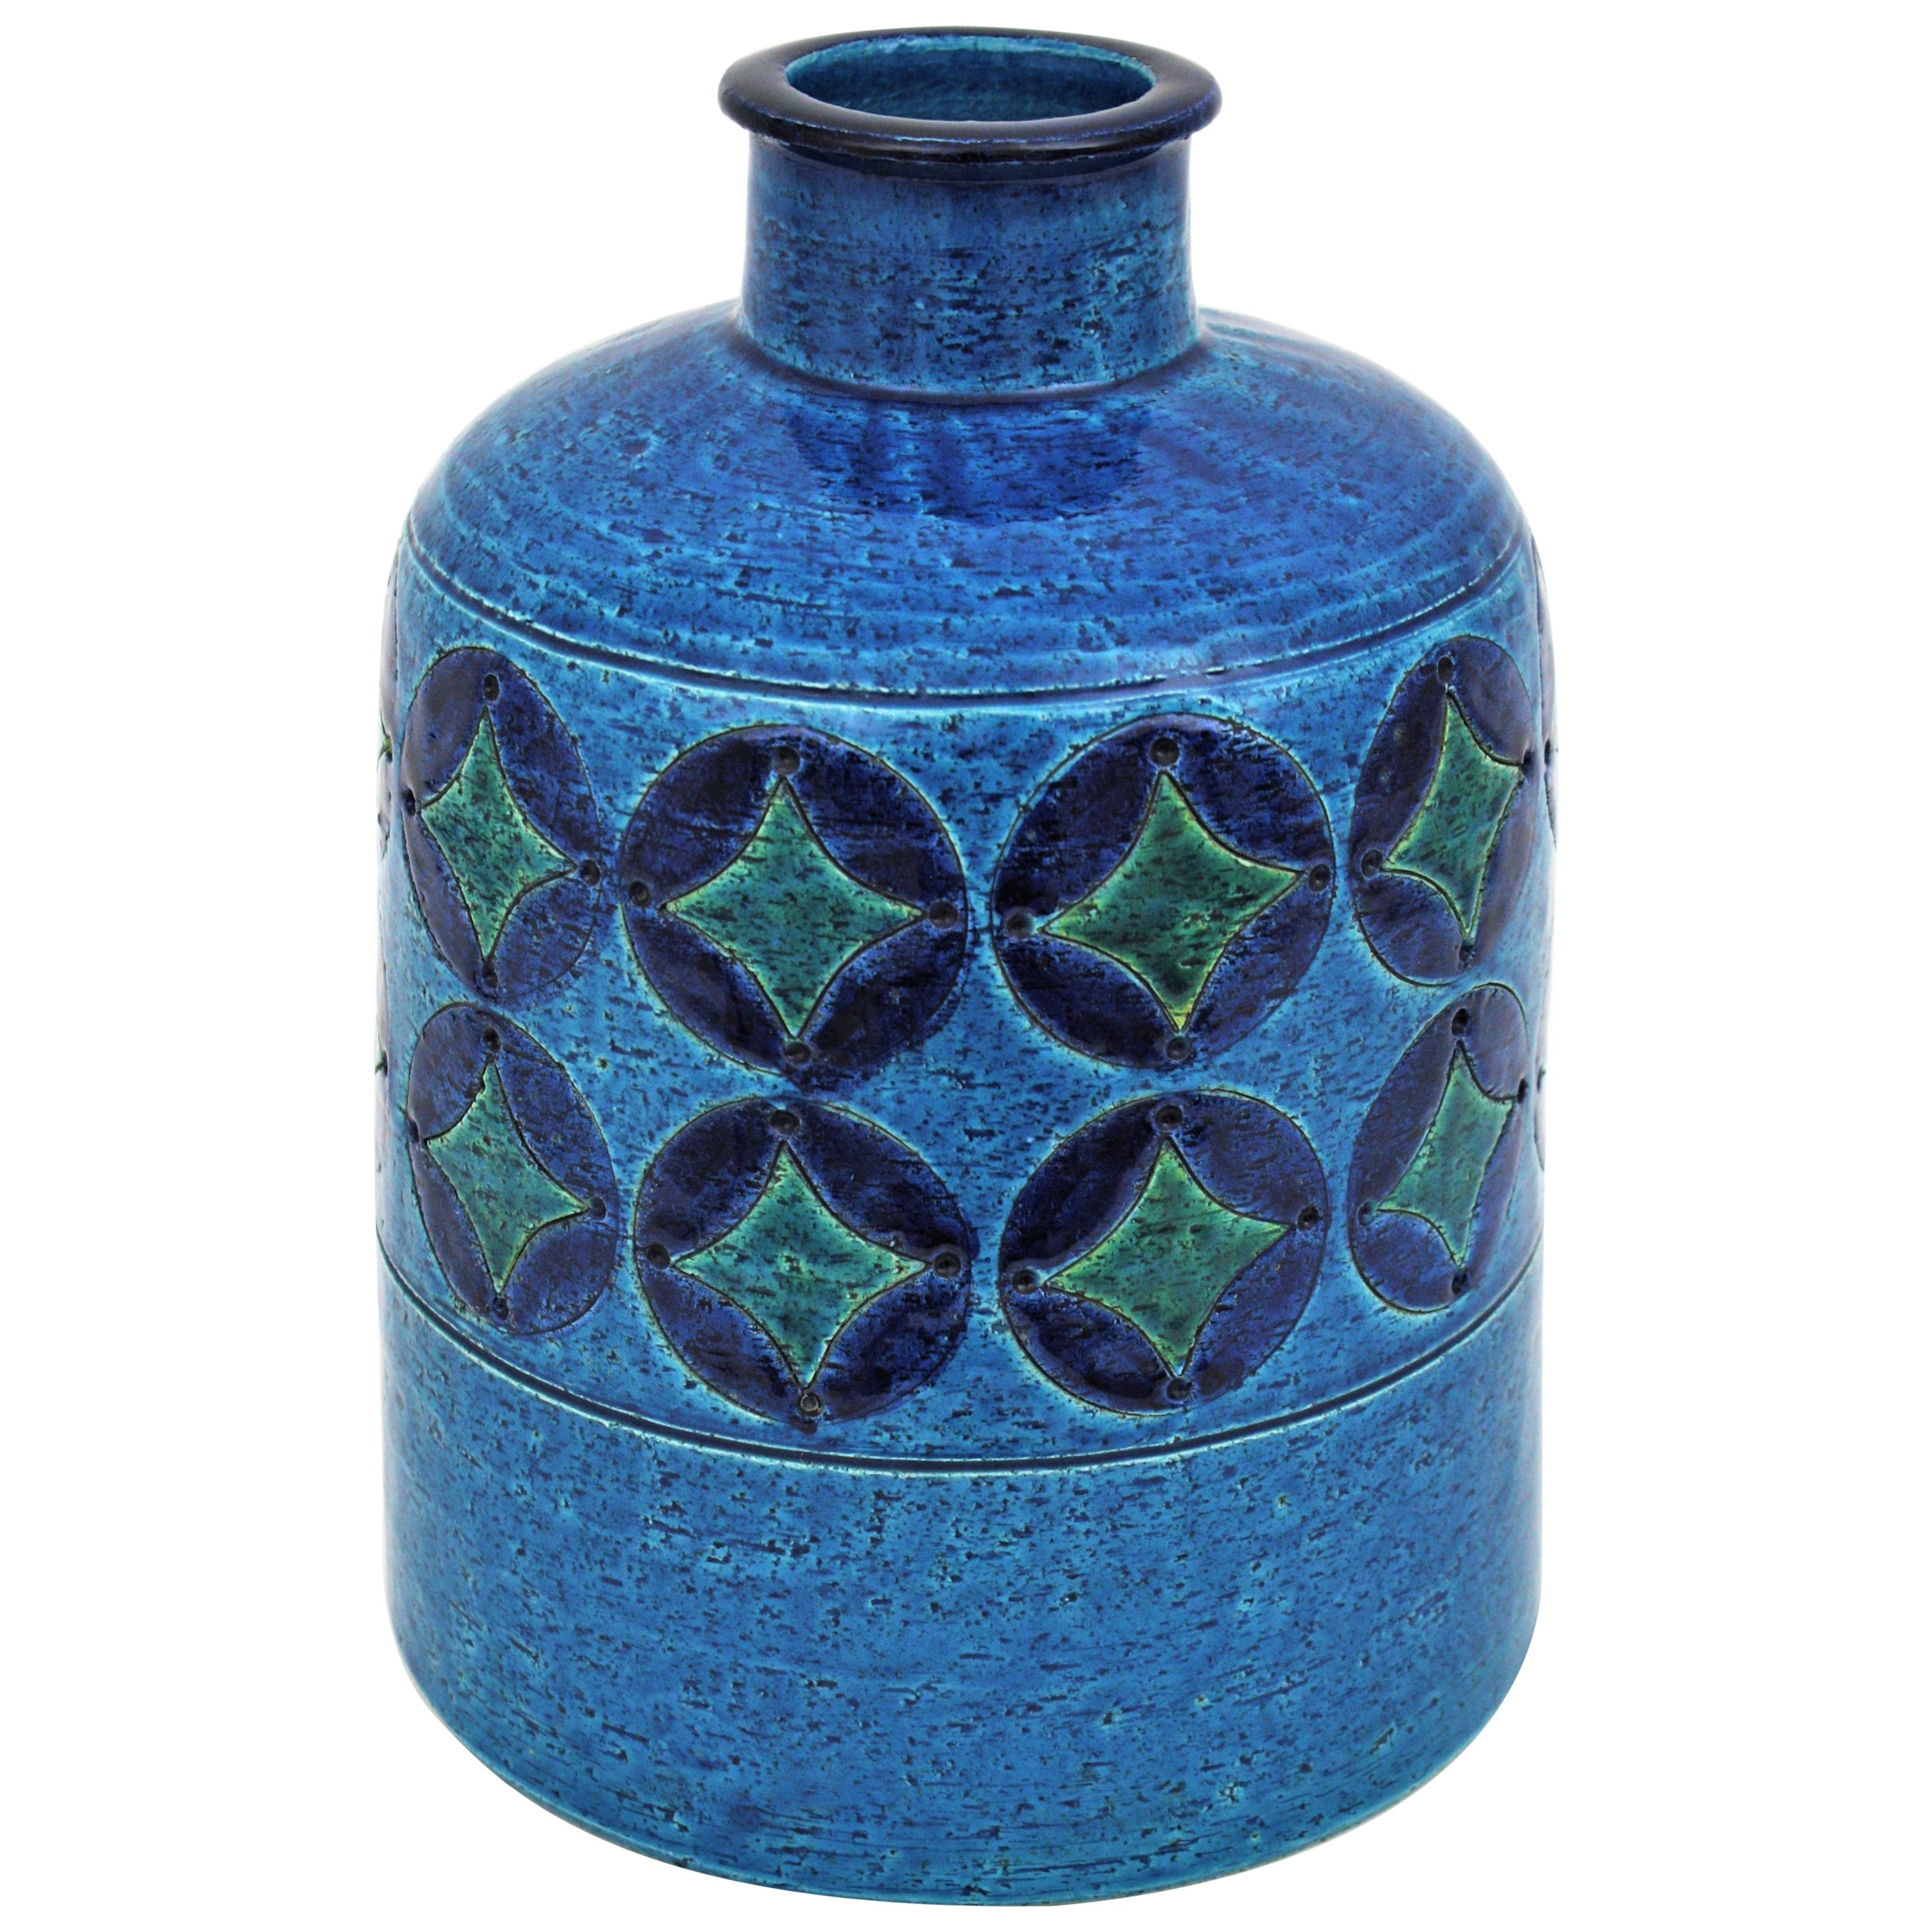 Bitossi Aldo Londi Blue Ceramic Large Bottle Vase with Circles & Rhombus Pattern For Sale